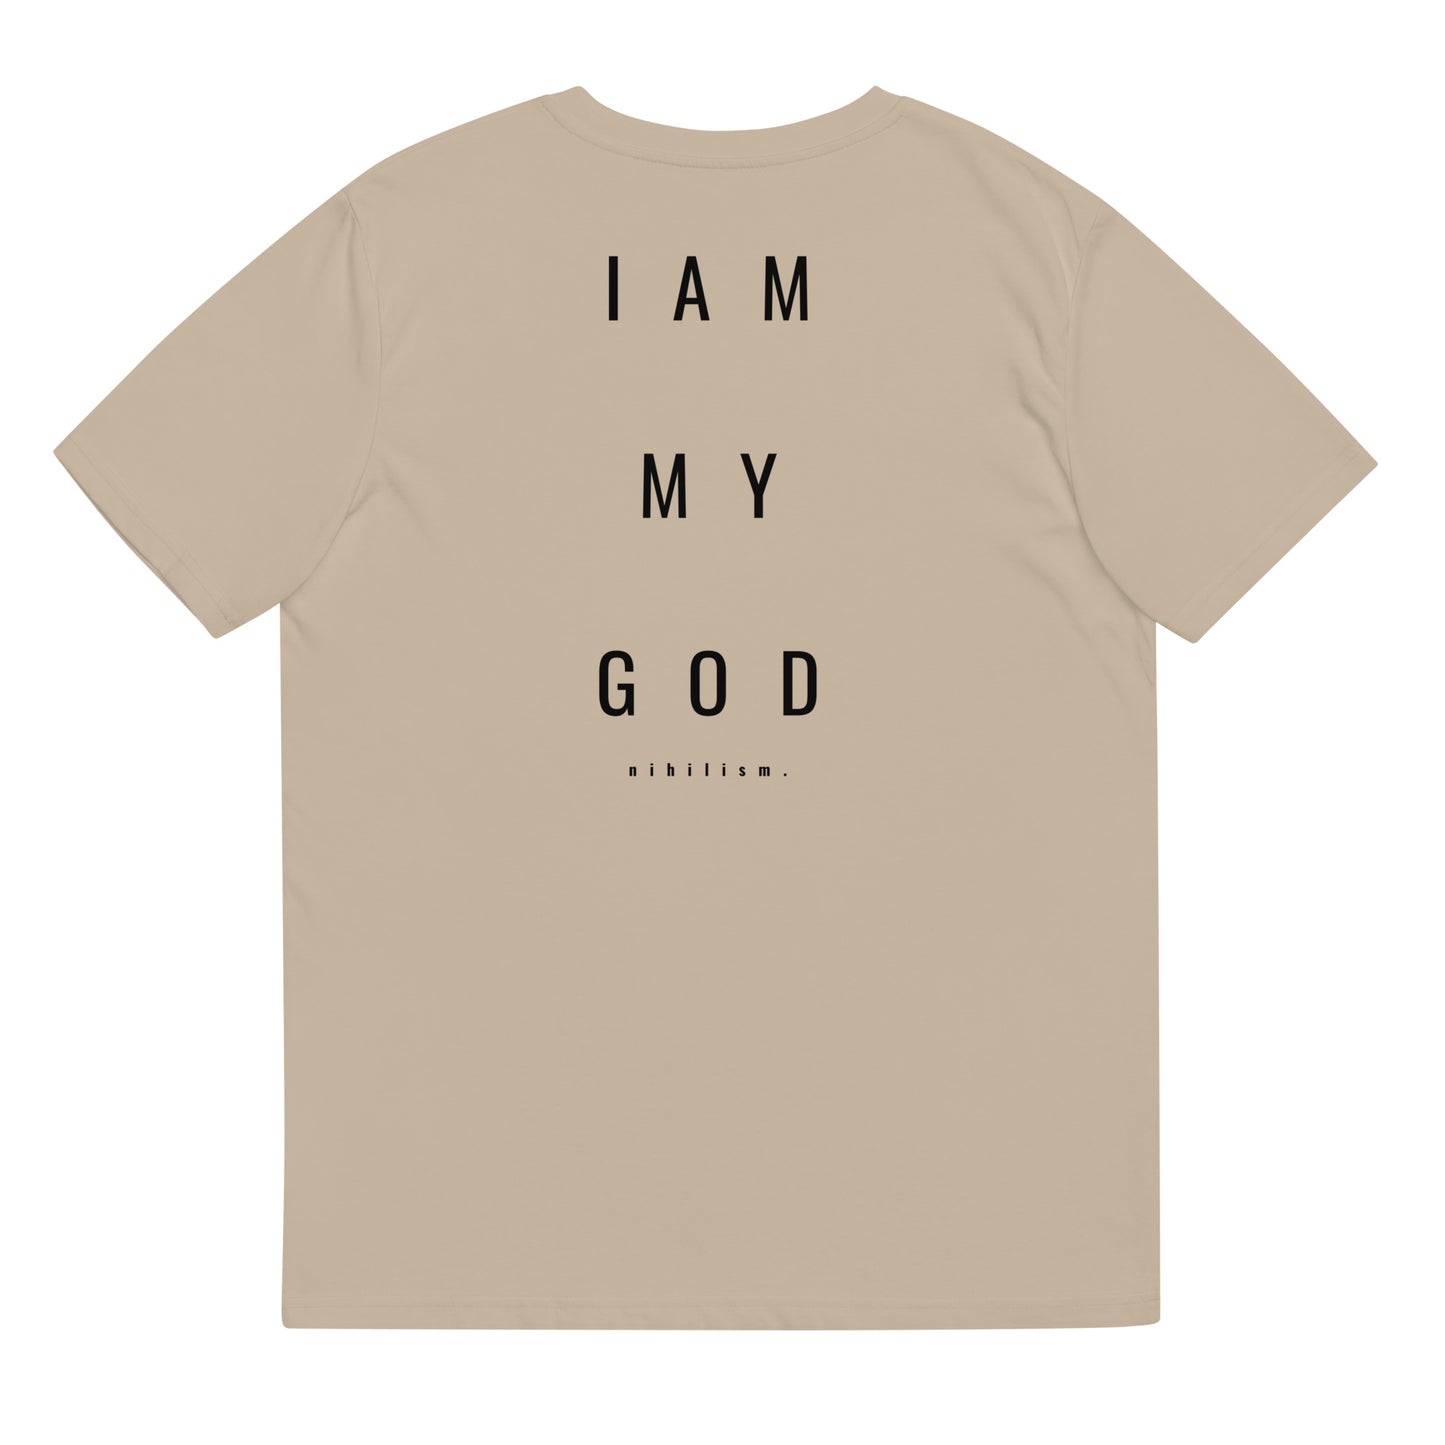 Unisex organic cotton t-shirt nihilism "I am my god" Essential